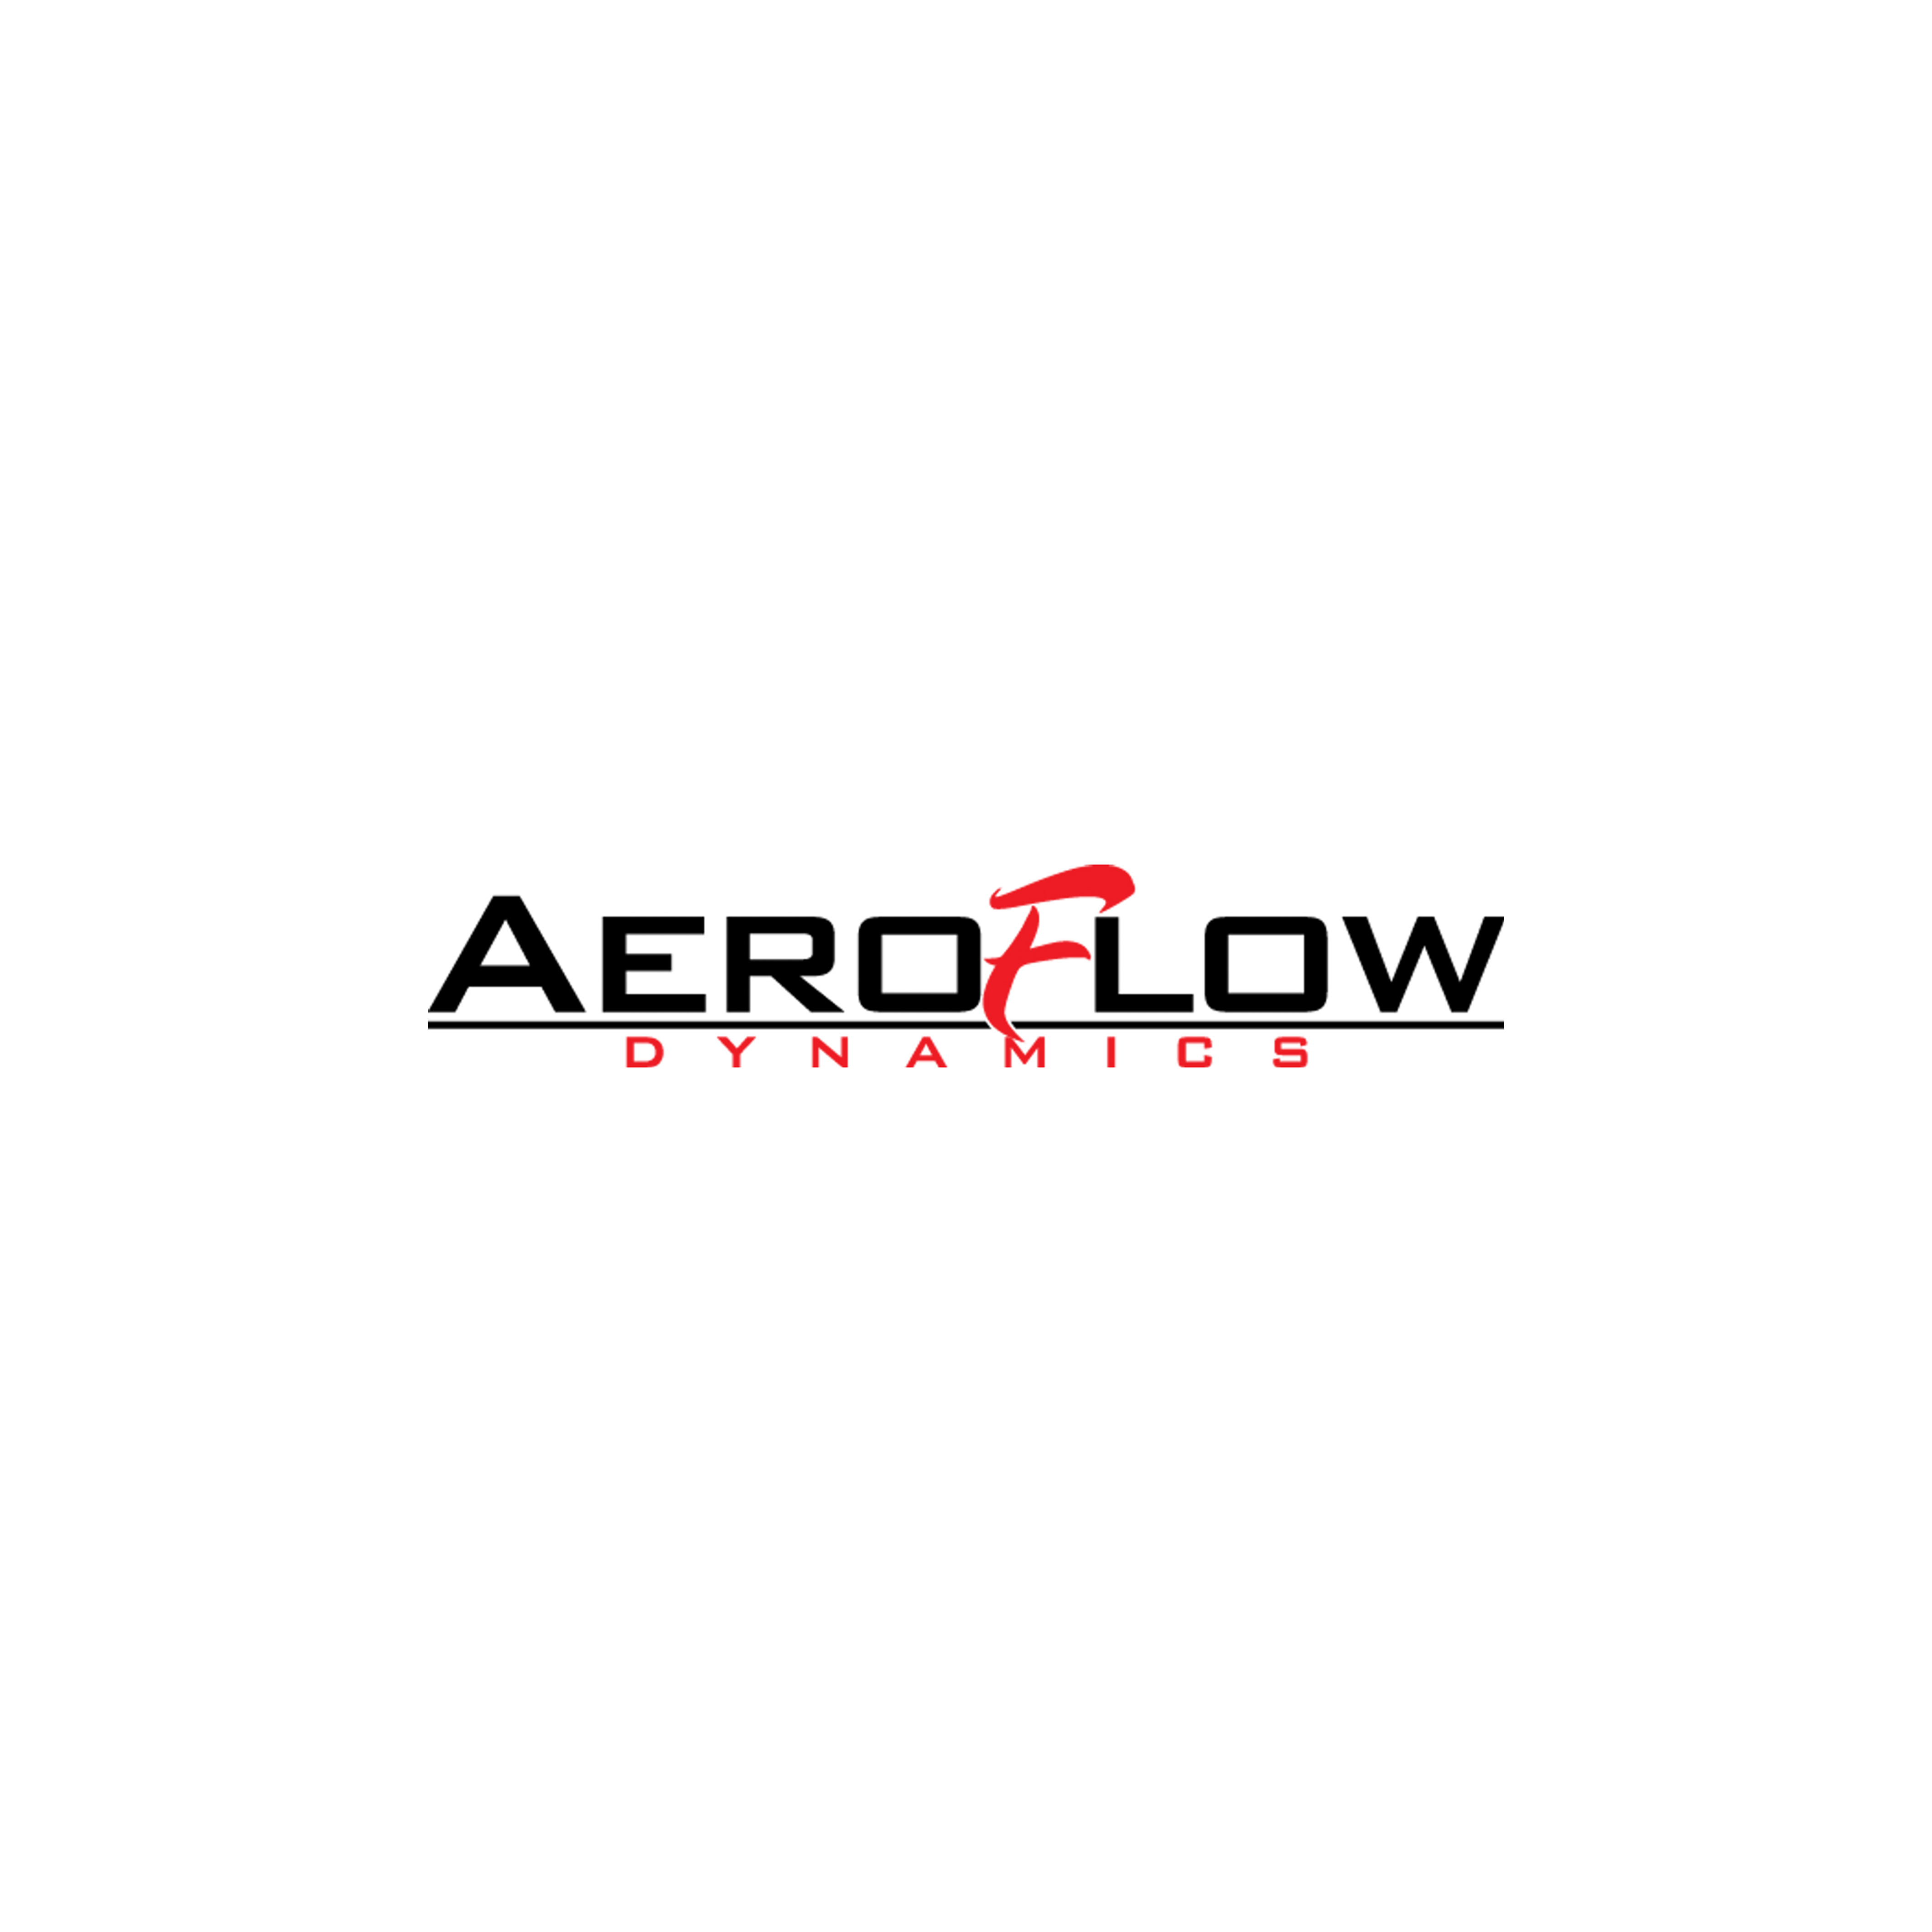 Aeroflowdynamics logo